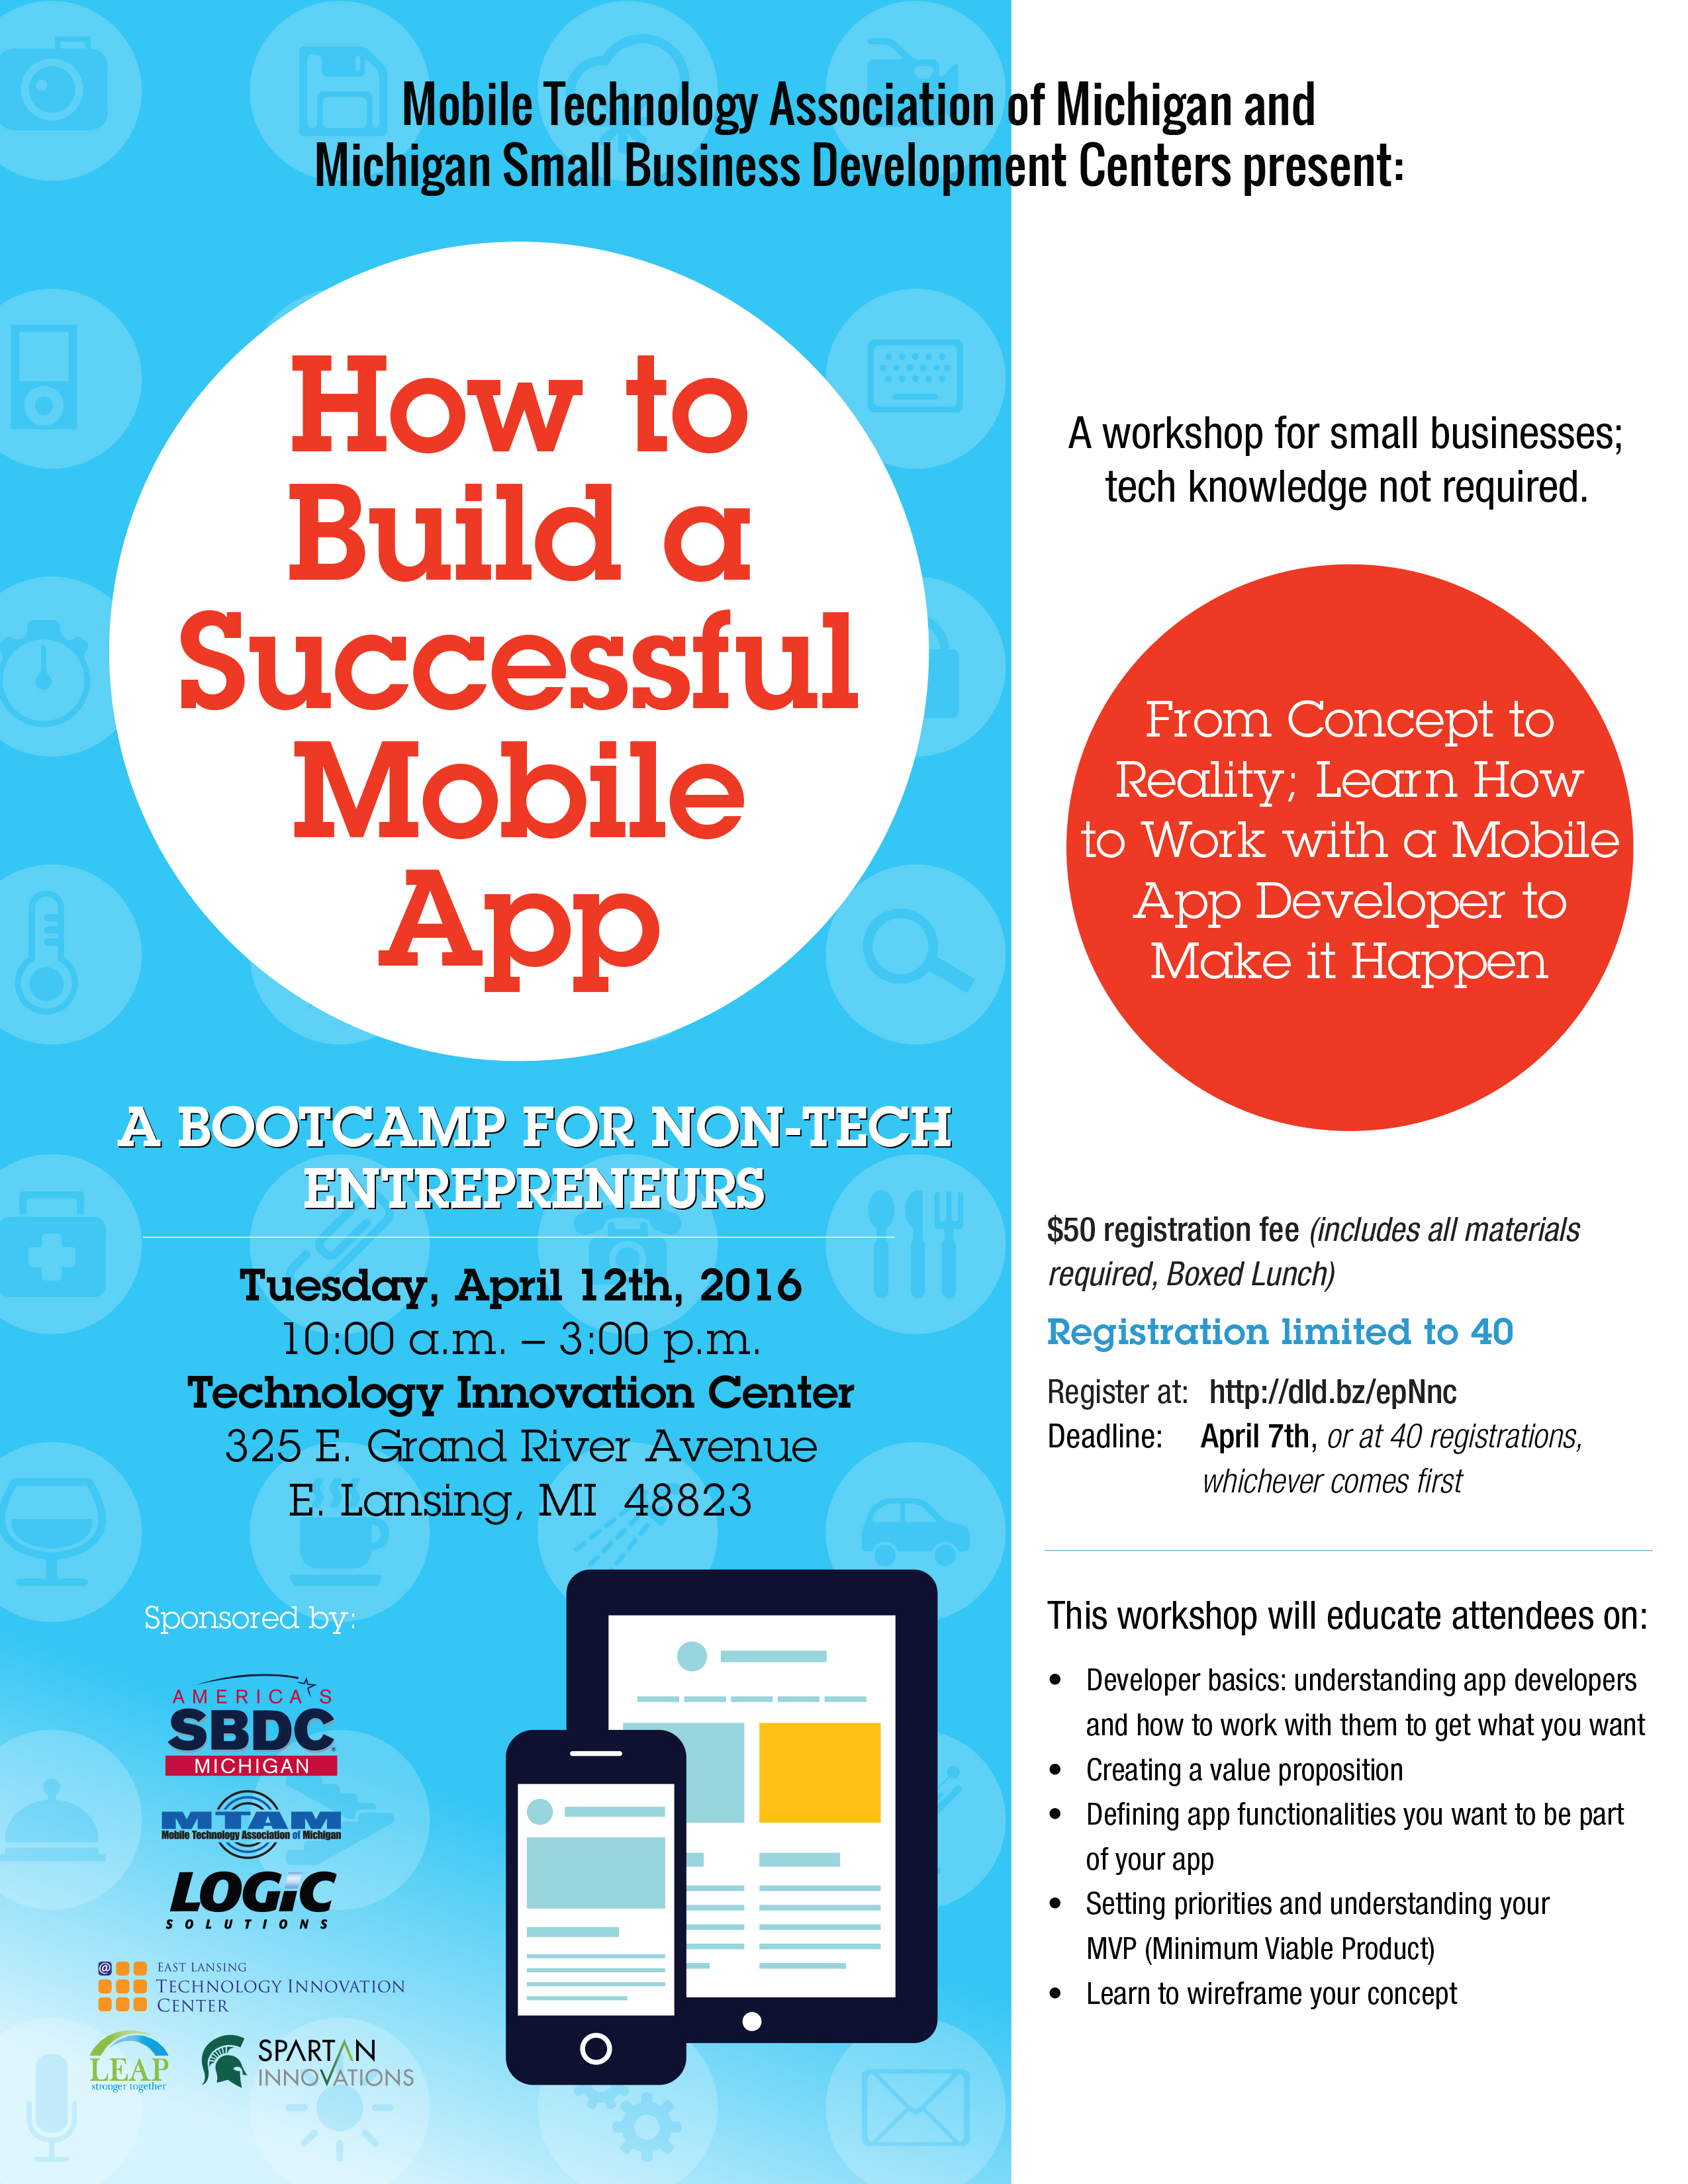 How to Build a Successful Mobile App: A Bootcamp for Non-Tech Entrepreneurs